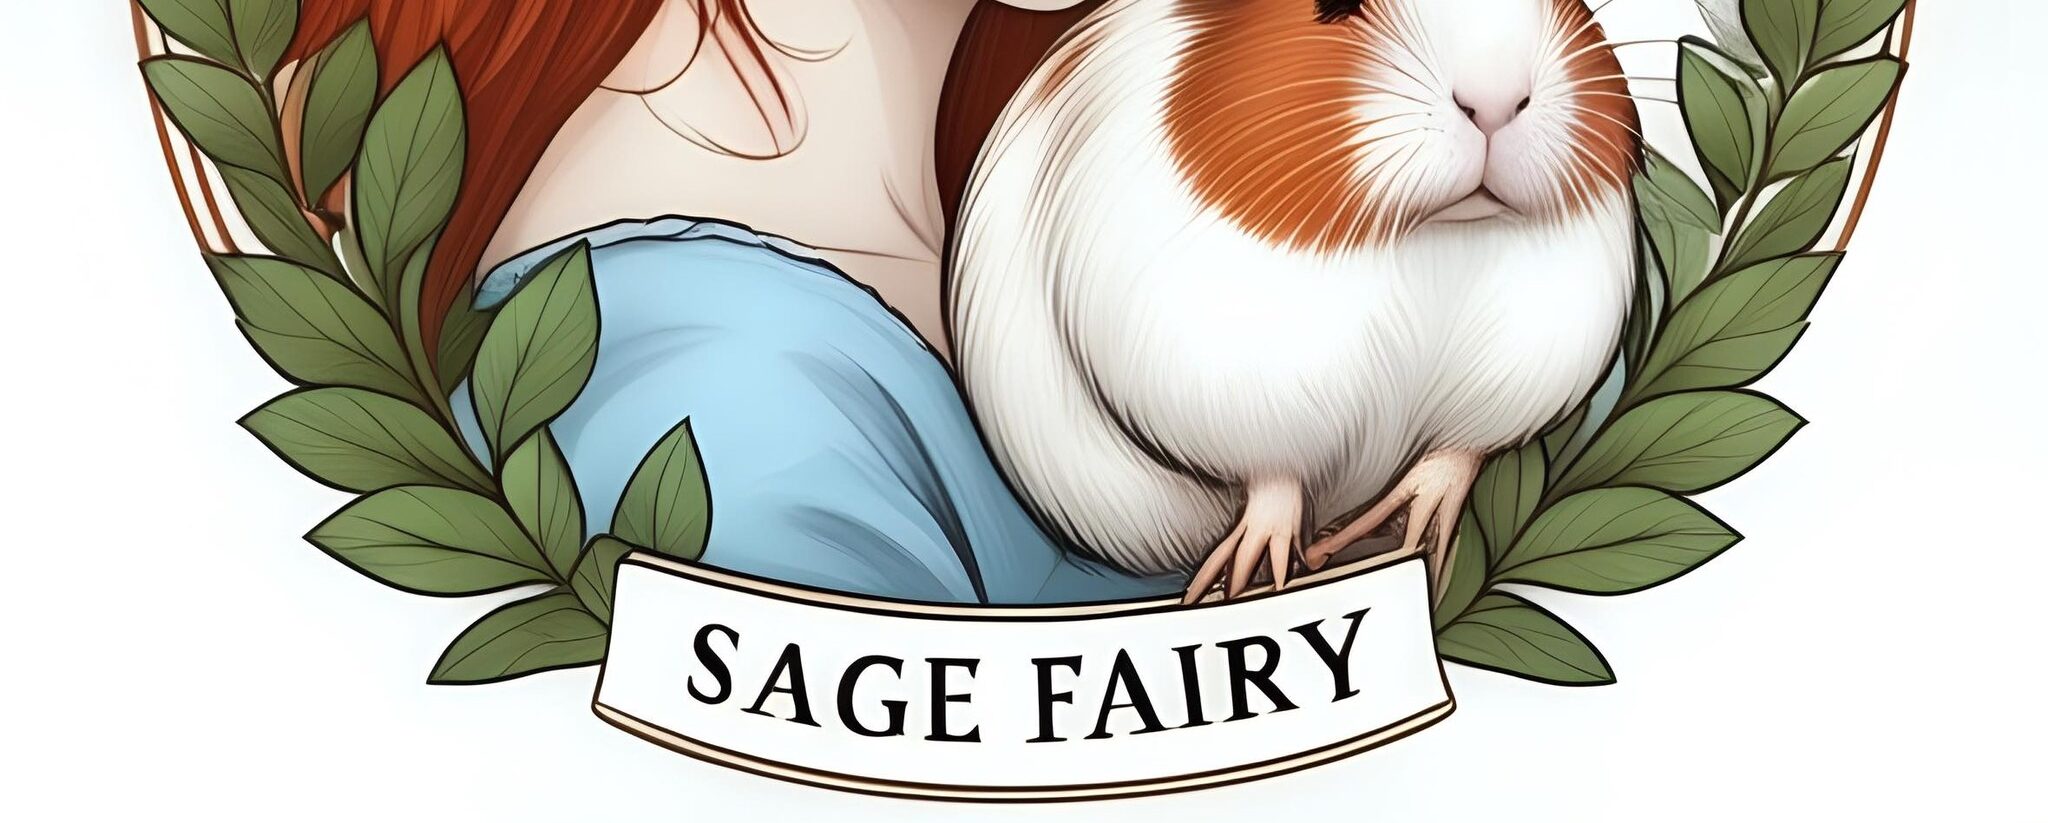 Sagefairy.com